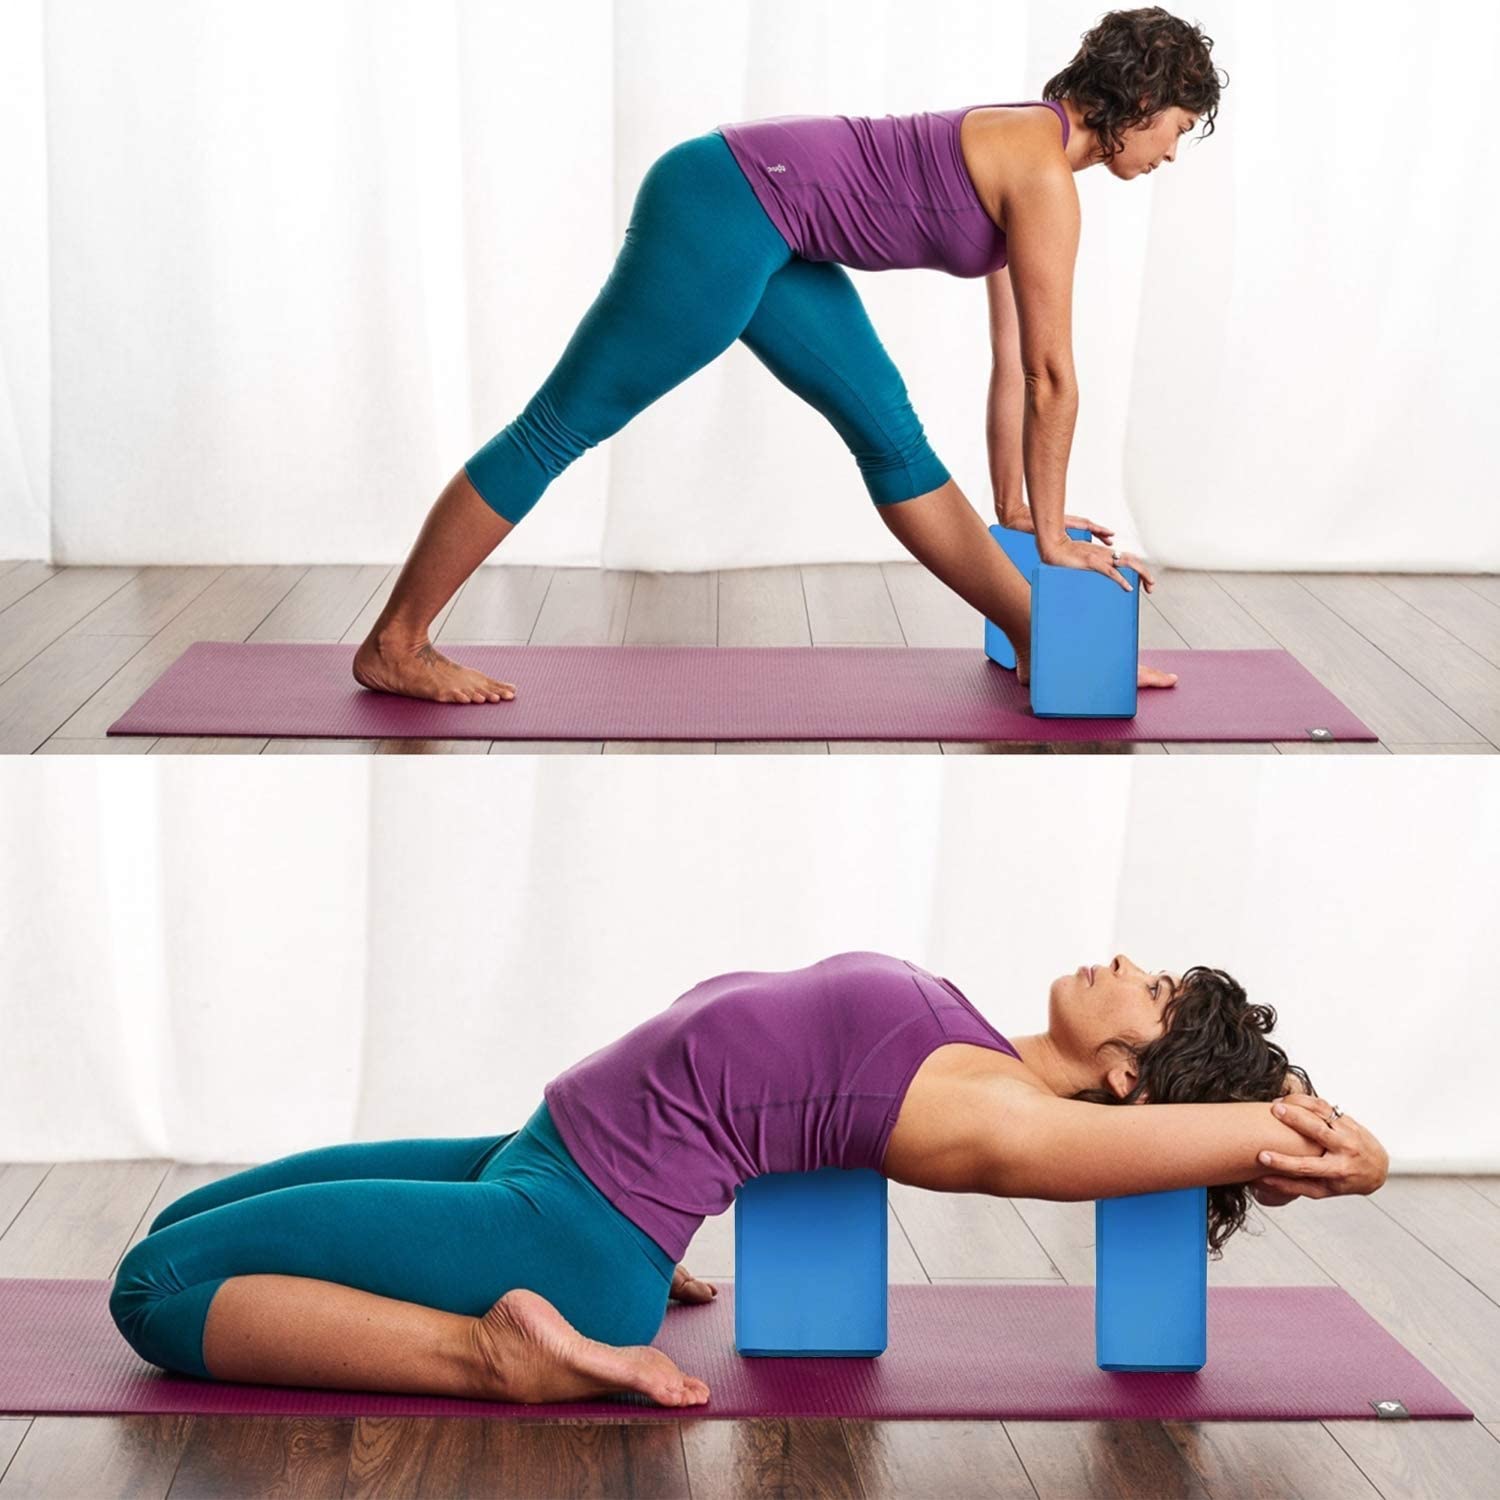 DARKNESS Yoga Blocks High Density Eva Foam Set of 2,Non Toxic Anti Skid Yoga  Brick Block for Improve Strength and Aid Balance and Flexibility for Women  Yoga Accessories Equipment (Multicolour) : 